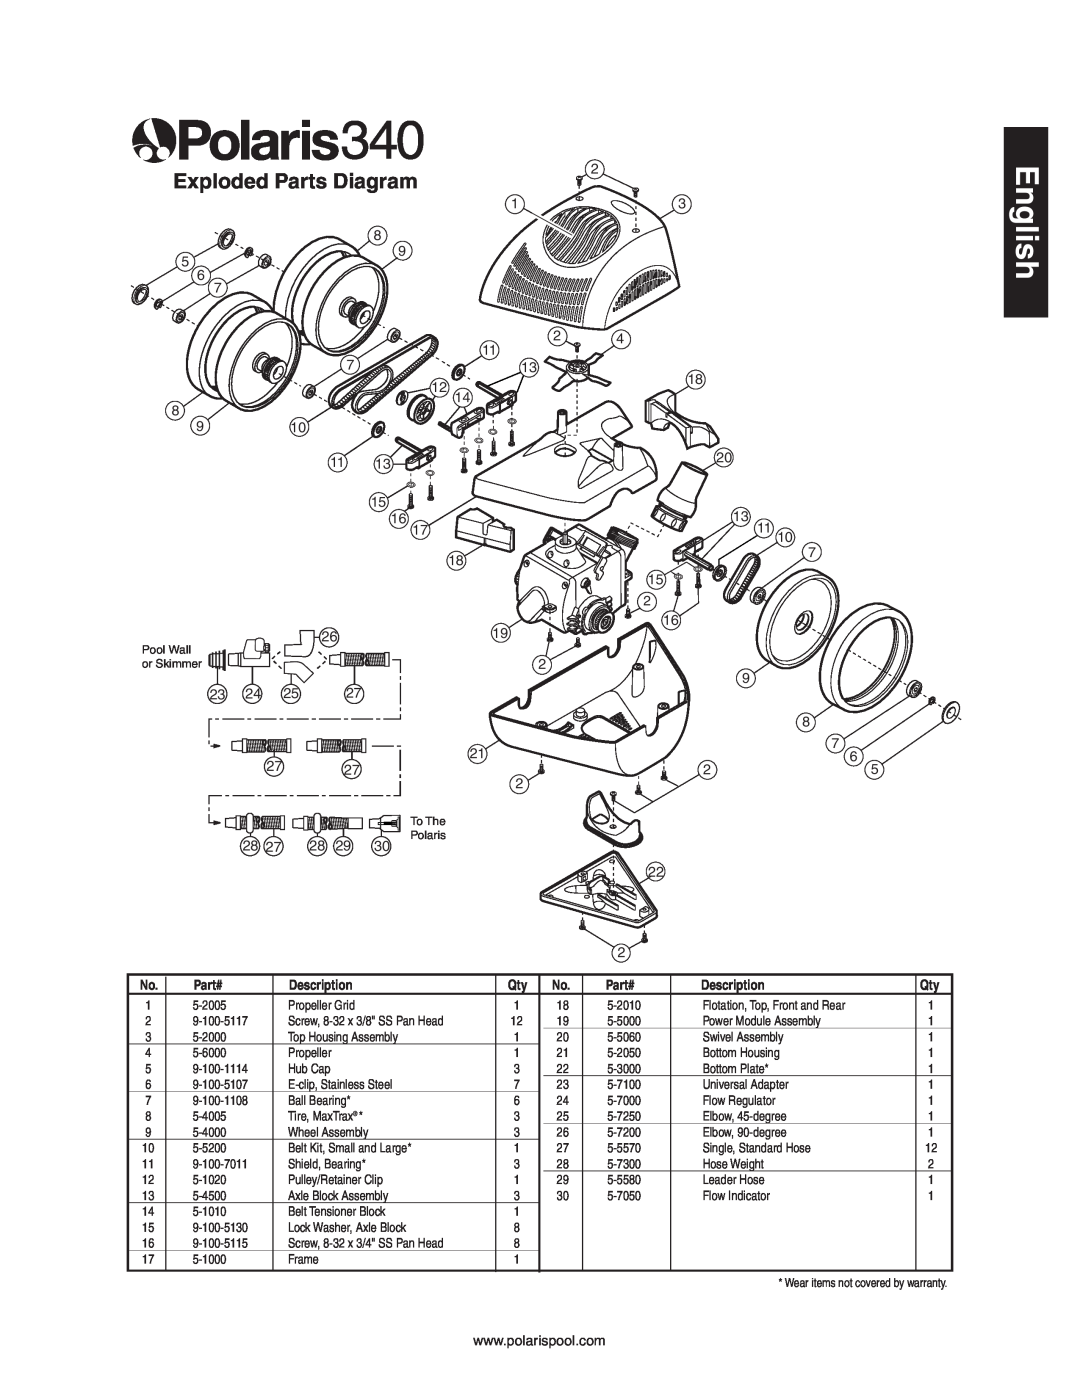 Polaris 340 owner manual Exploded Parts Diagram, English, Part#, Description 